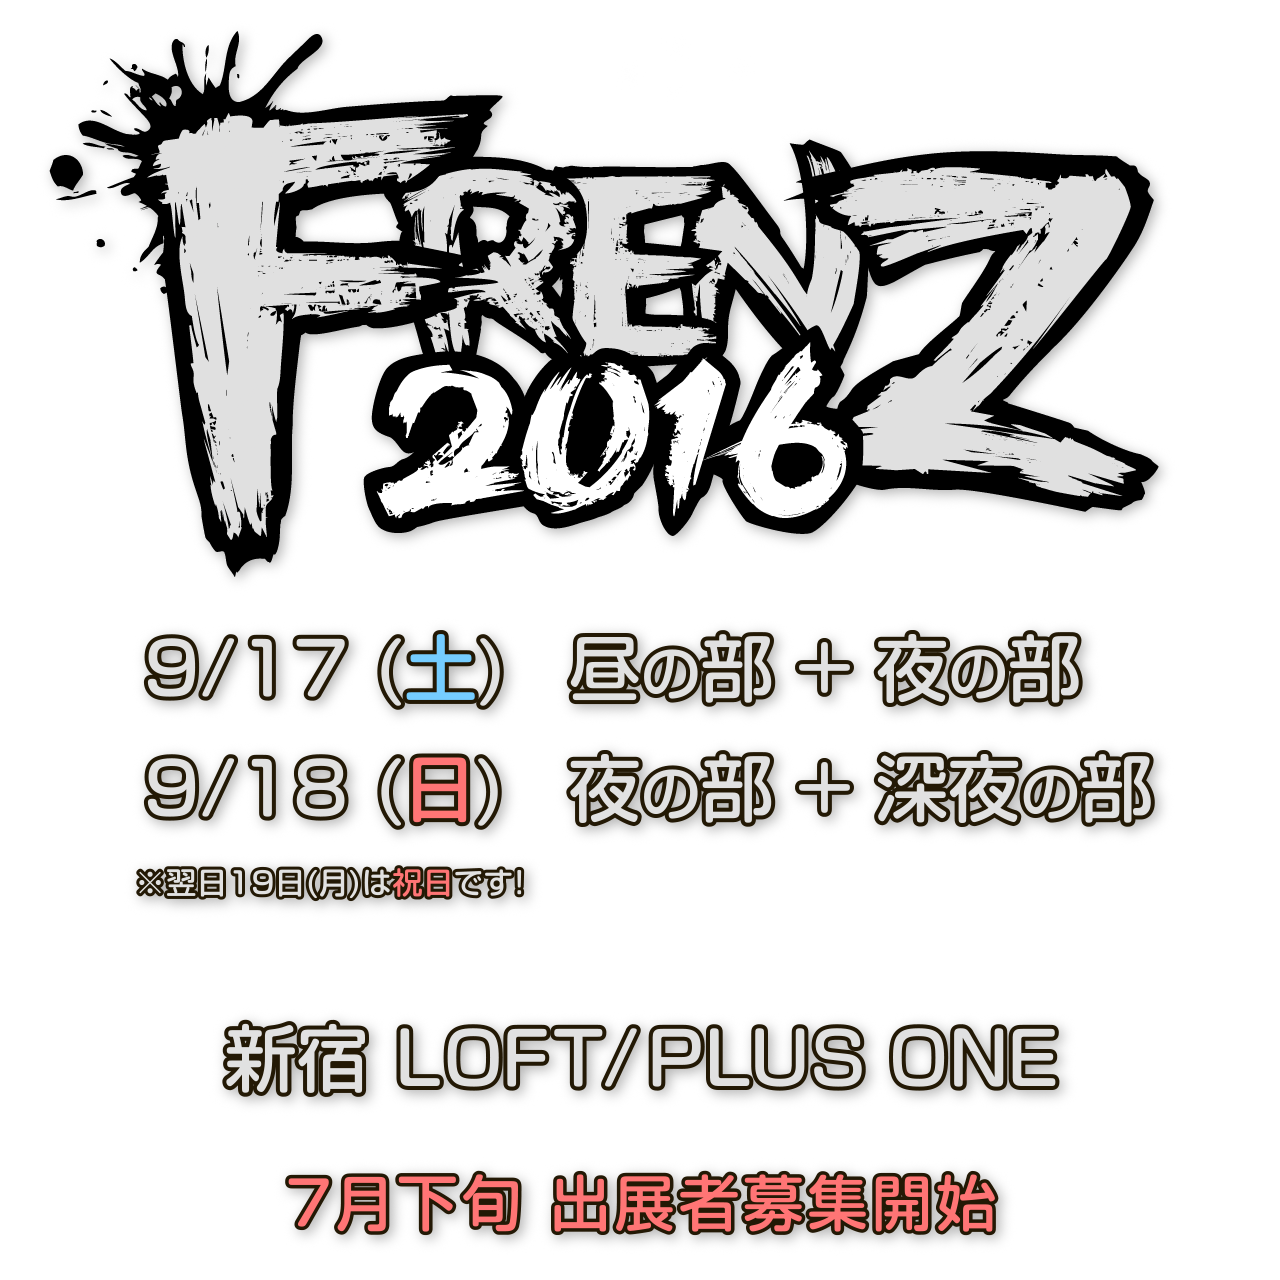 Web上で話題の映像クリエイターによる、新作映像上映イベント『FRENZ 2016』9/17（土）・9/18（日） 新宿LOFT/PLUS ONE にて開催！